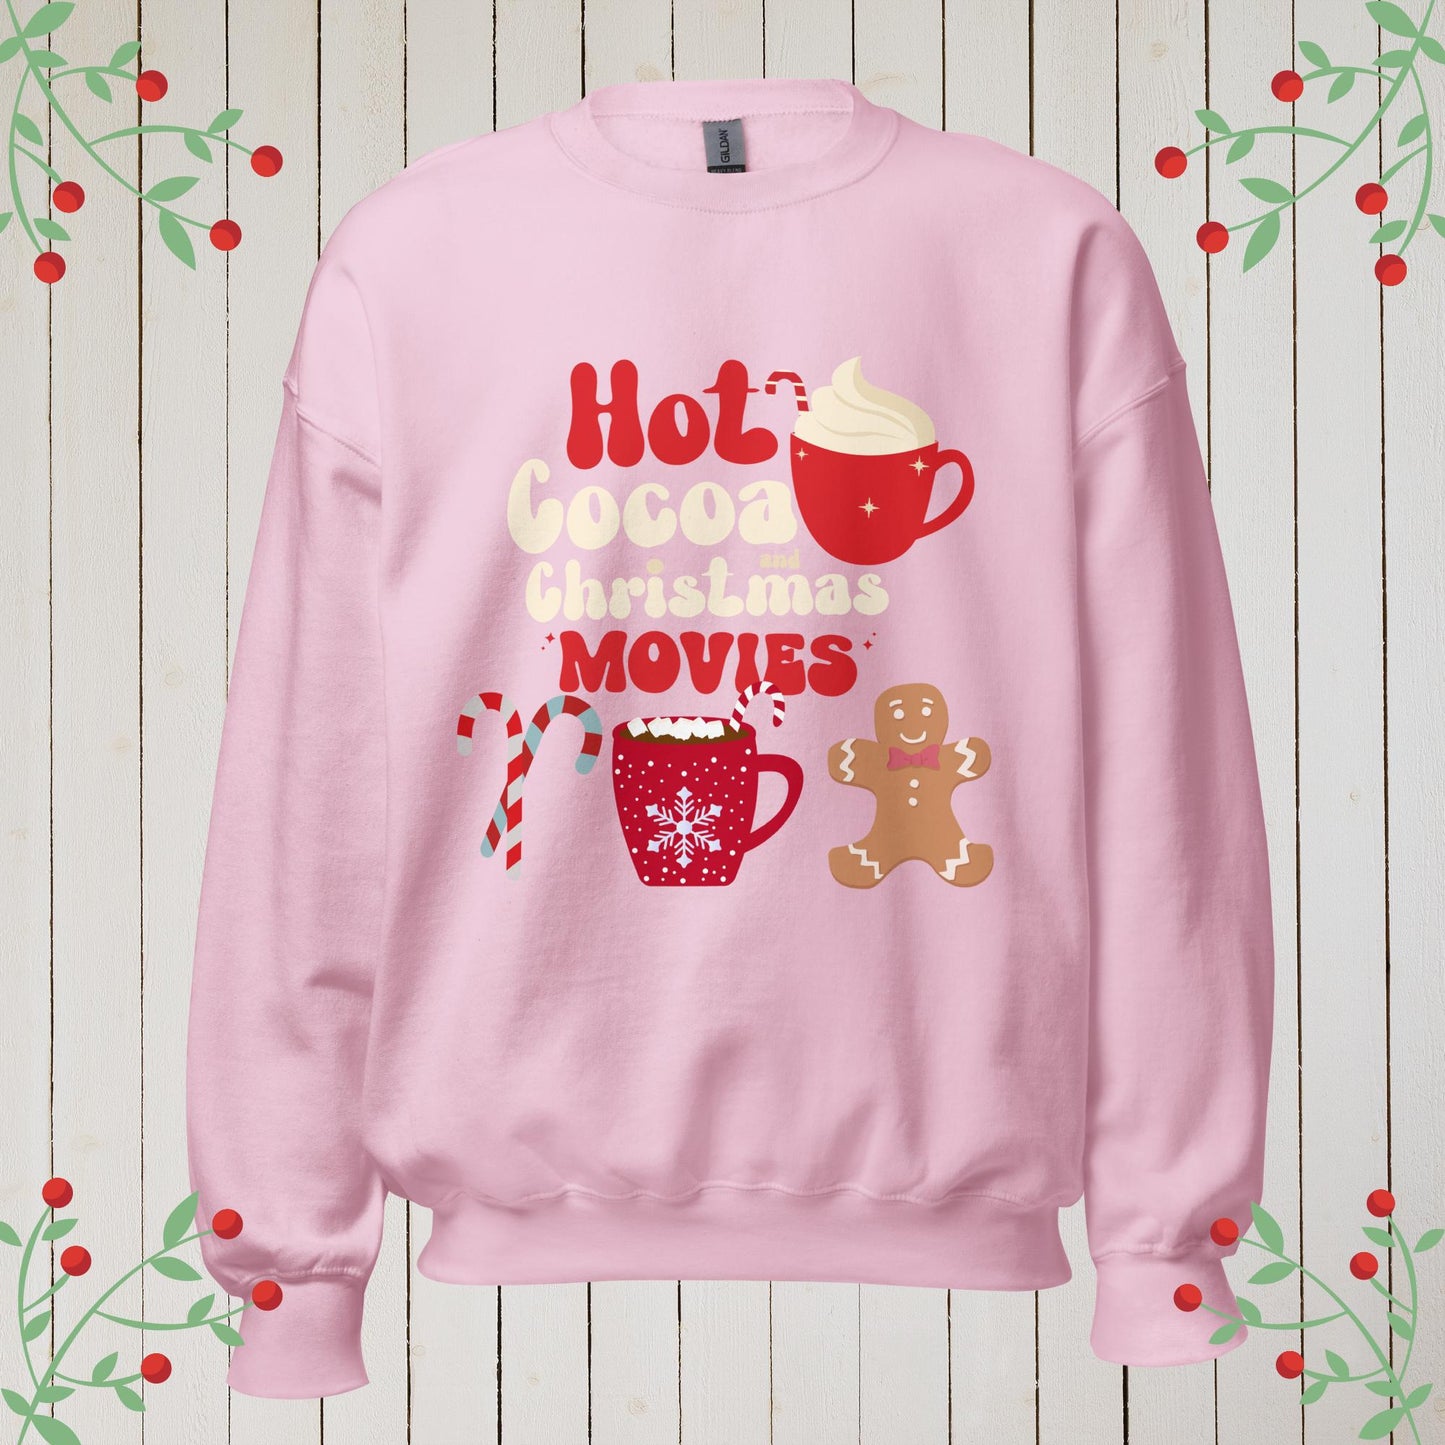 Christmas and Movies Sweatshirt